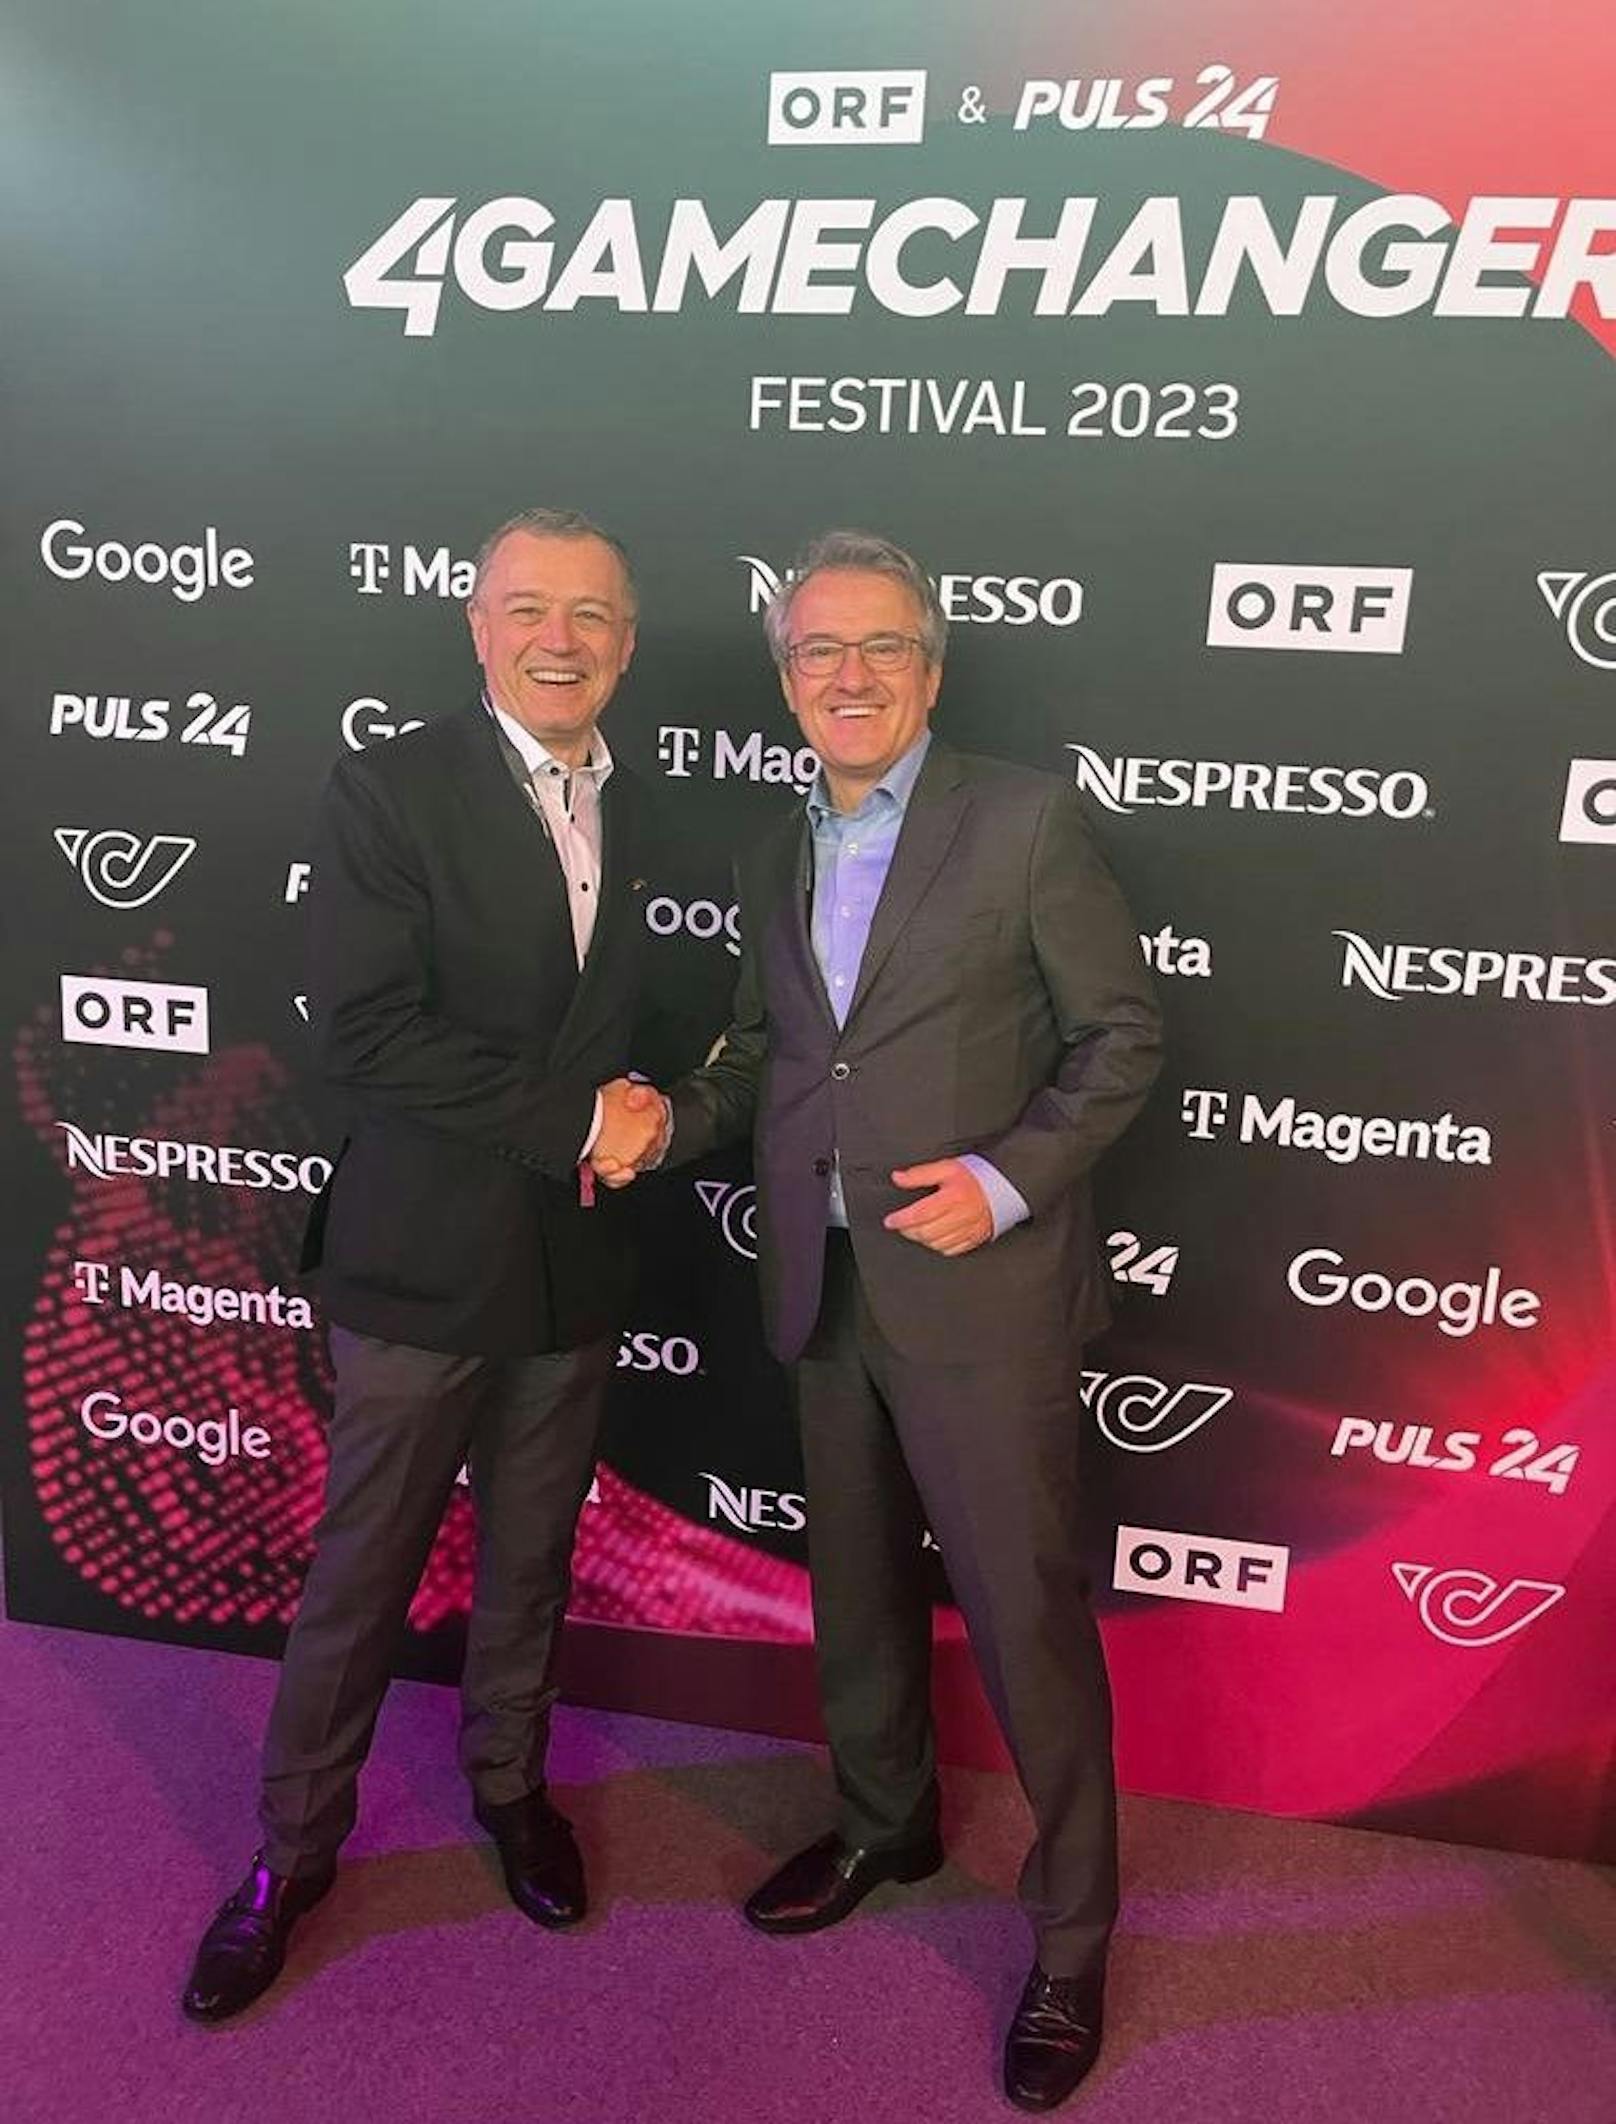 &nbsp;Markus Schaffhauser, CEO Eviden and Atos Business, mit Gerhard Schuster, CEO Together CCA, am 4GameChangers-Festival.